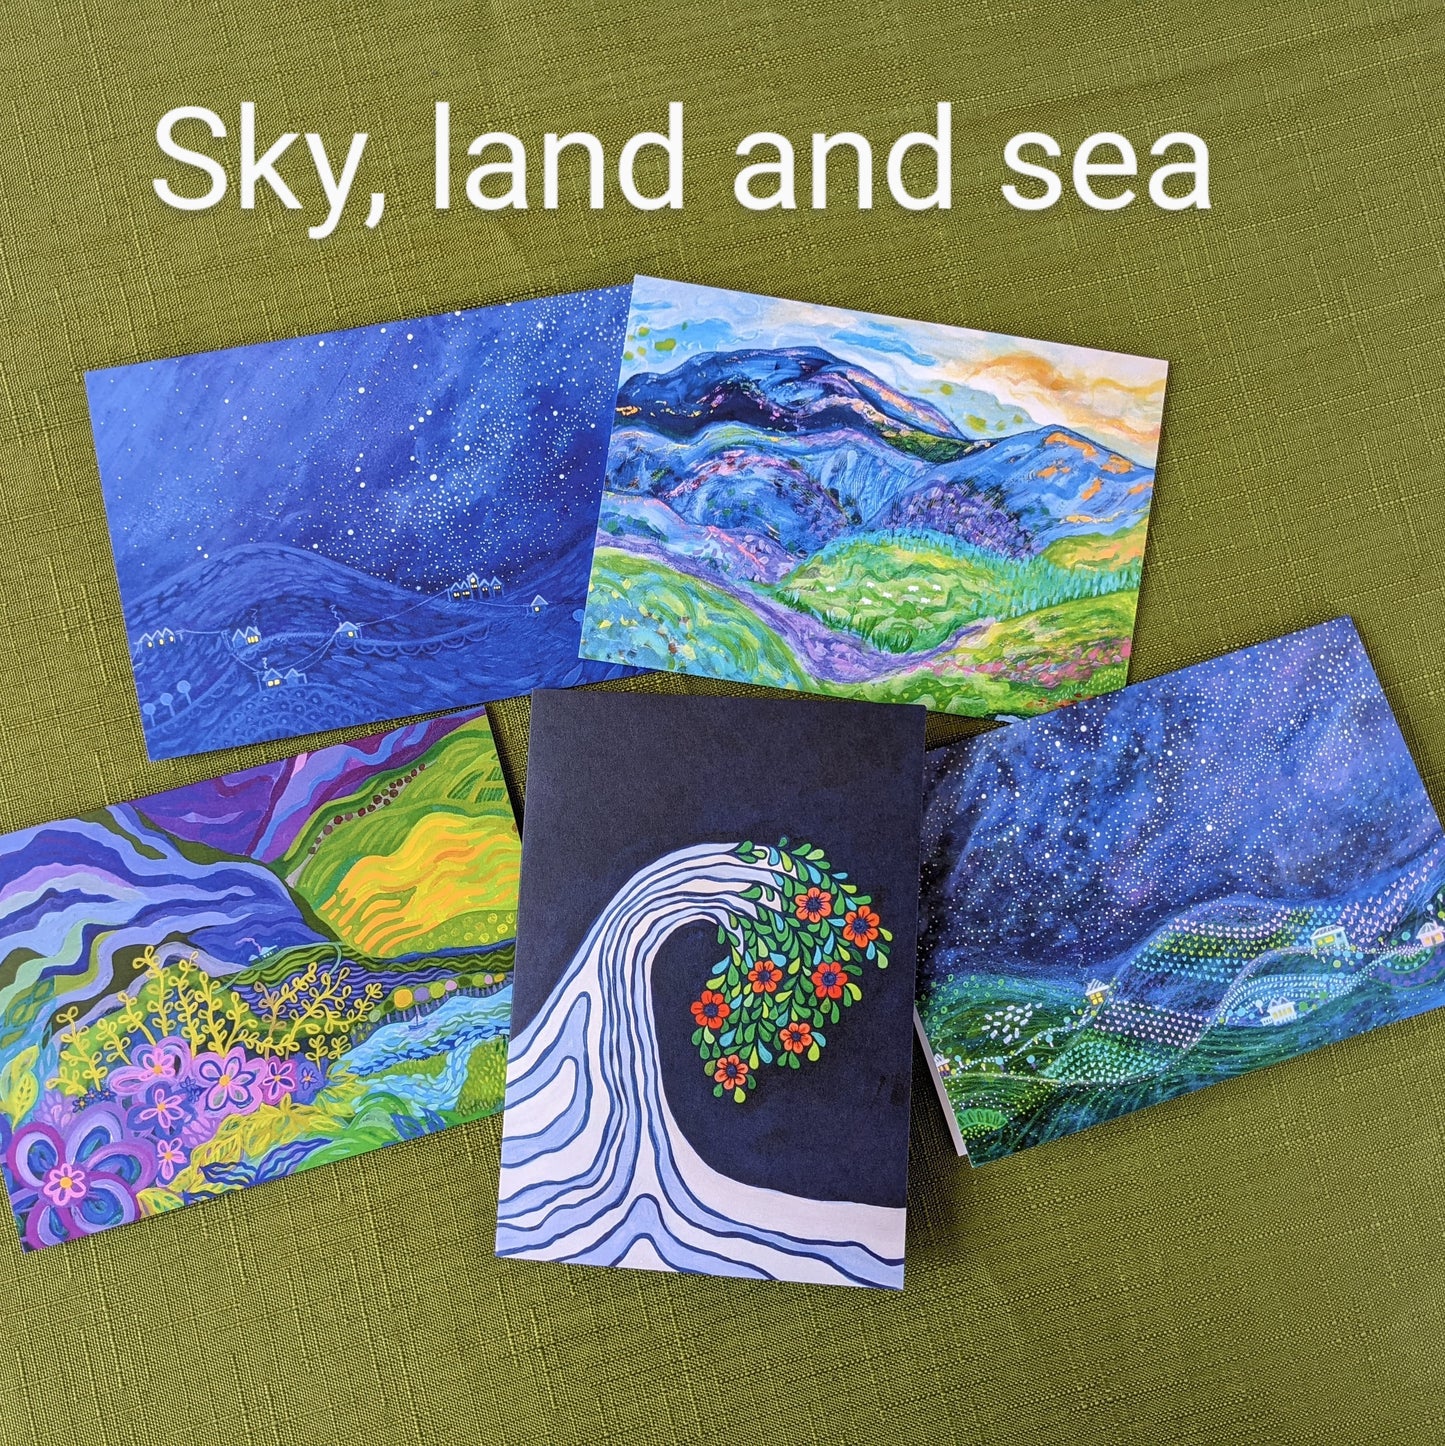 Art Cards - 'Sky, Land and Sea' theme (set 5)